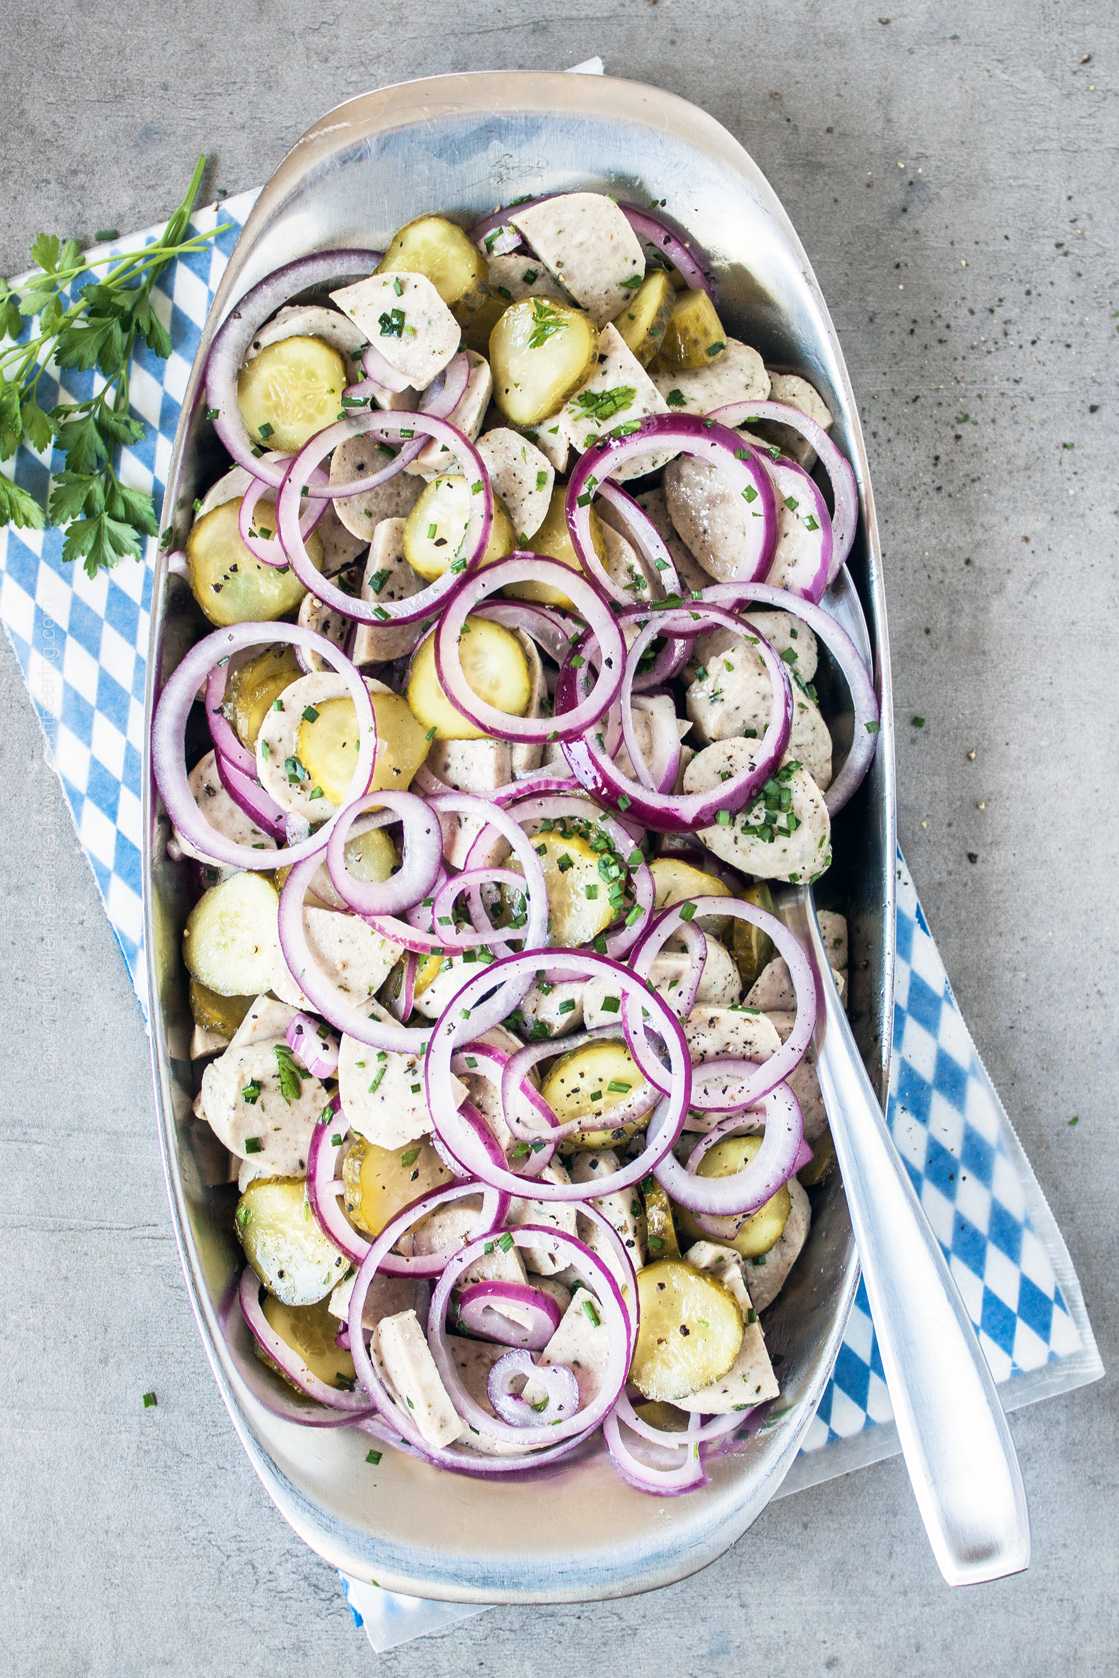 Wurstsalat – Bavarian Sausage Salad